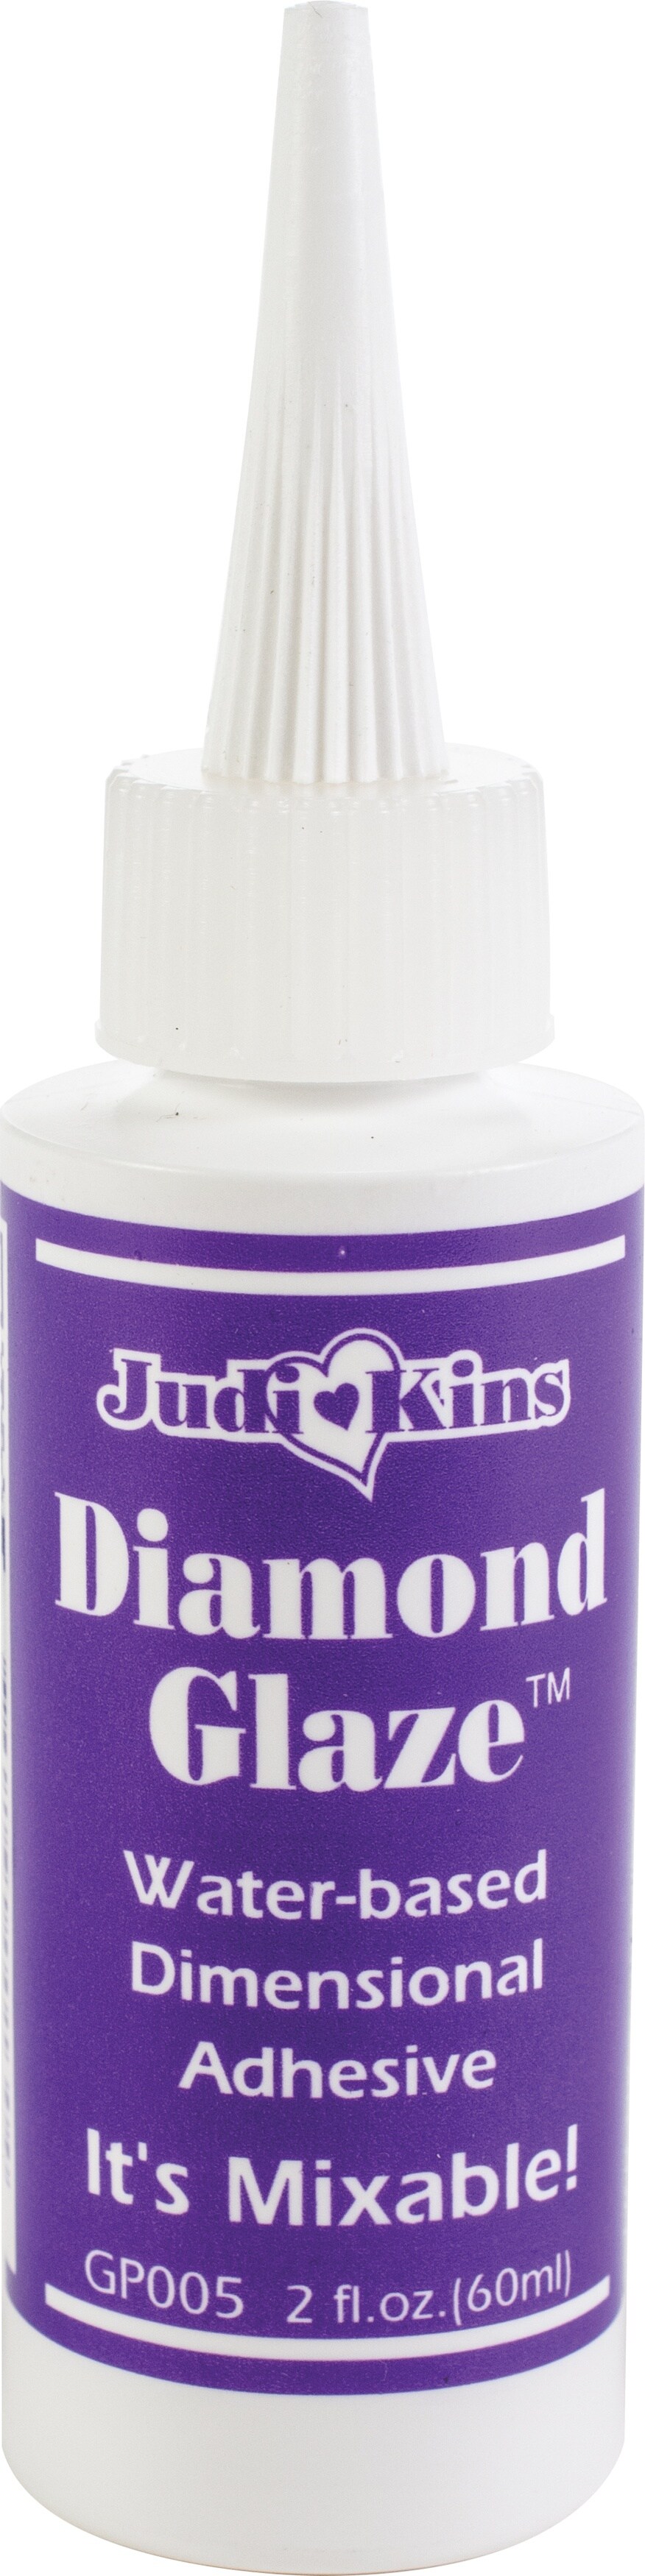 Multipack of 5 - Judikins Diamond Glaze Dimensional Adhesive 2oz-Precision  Tip